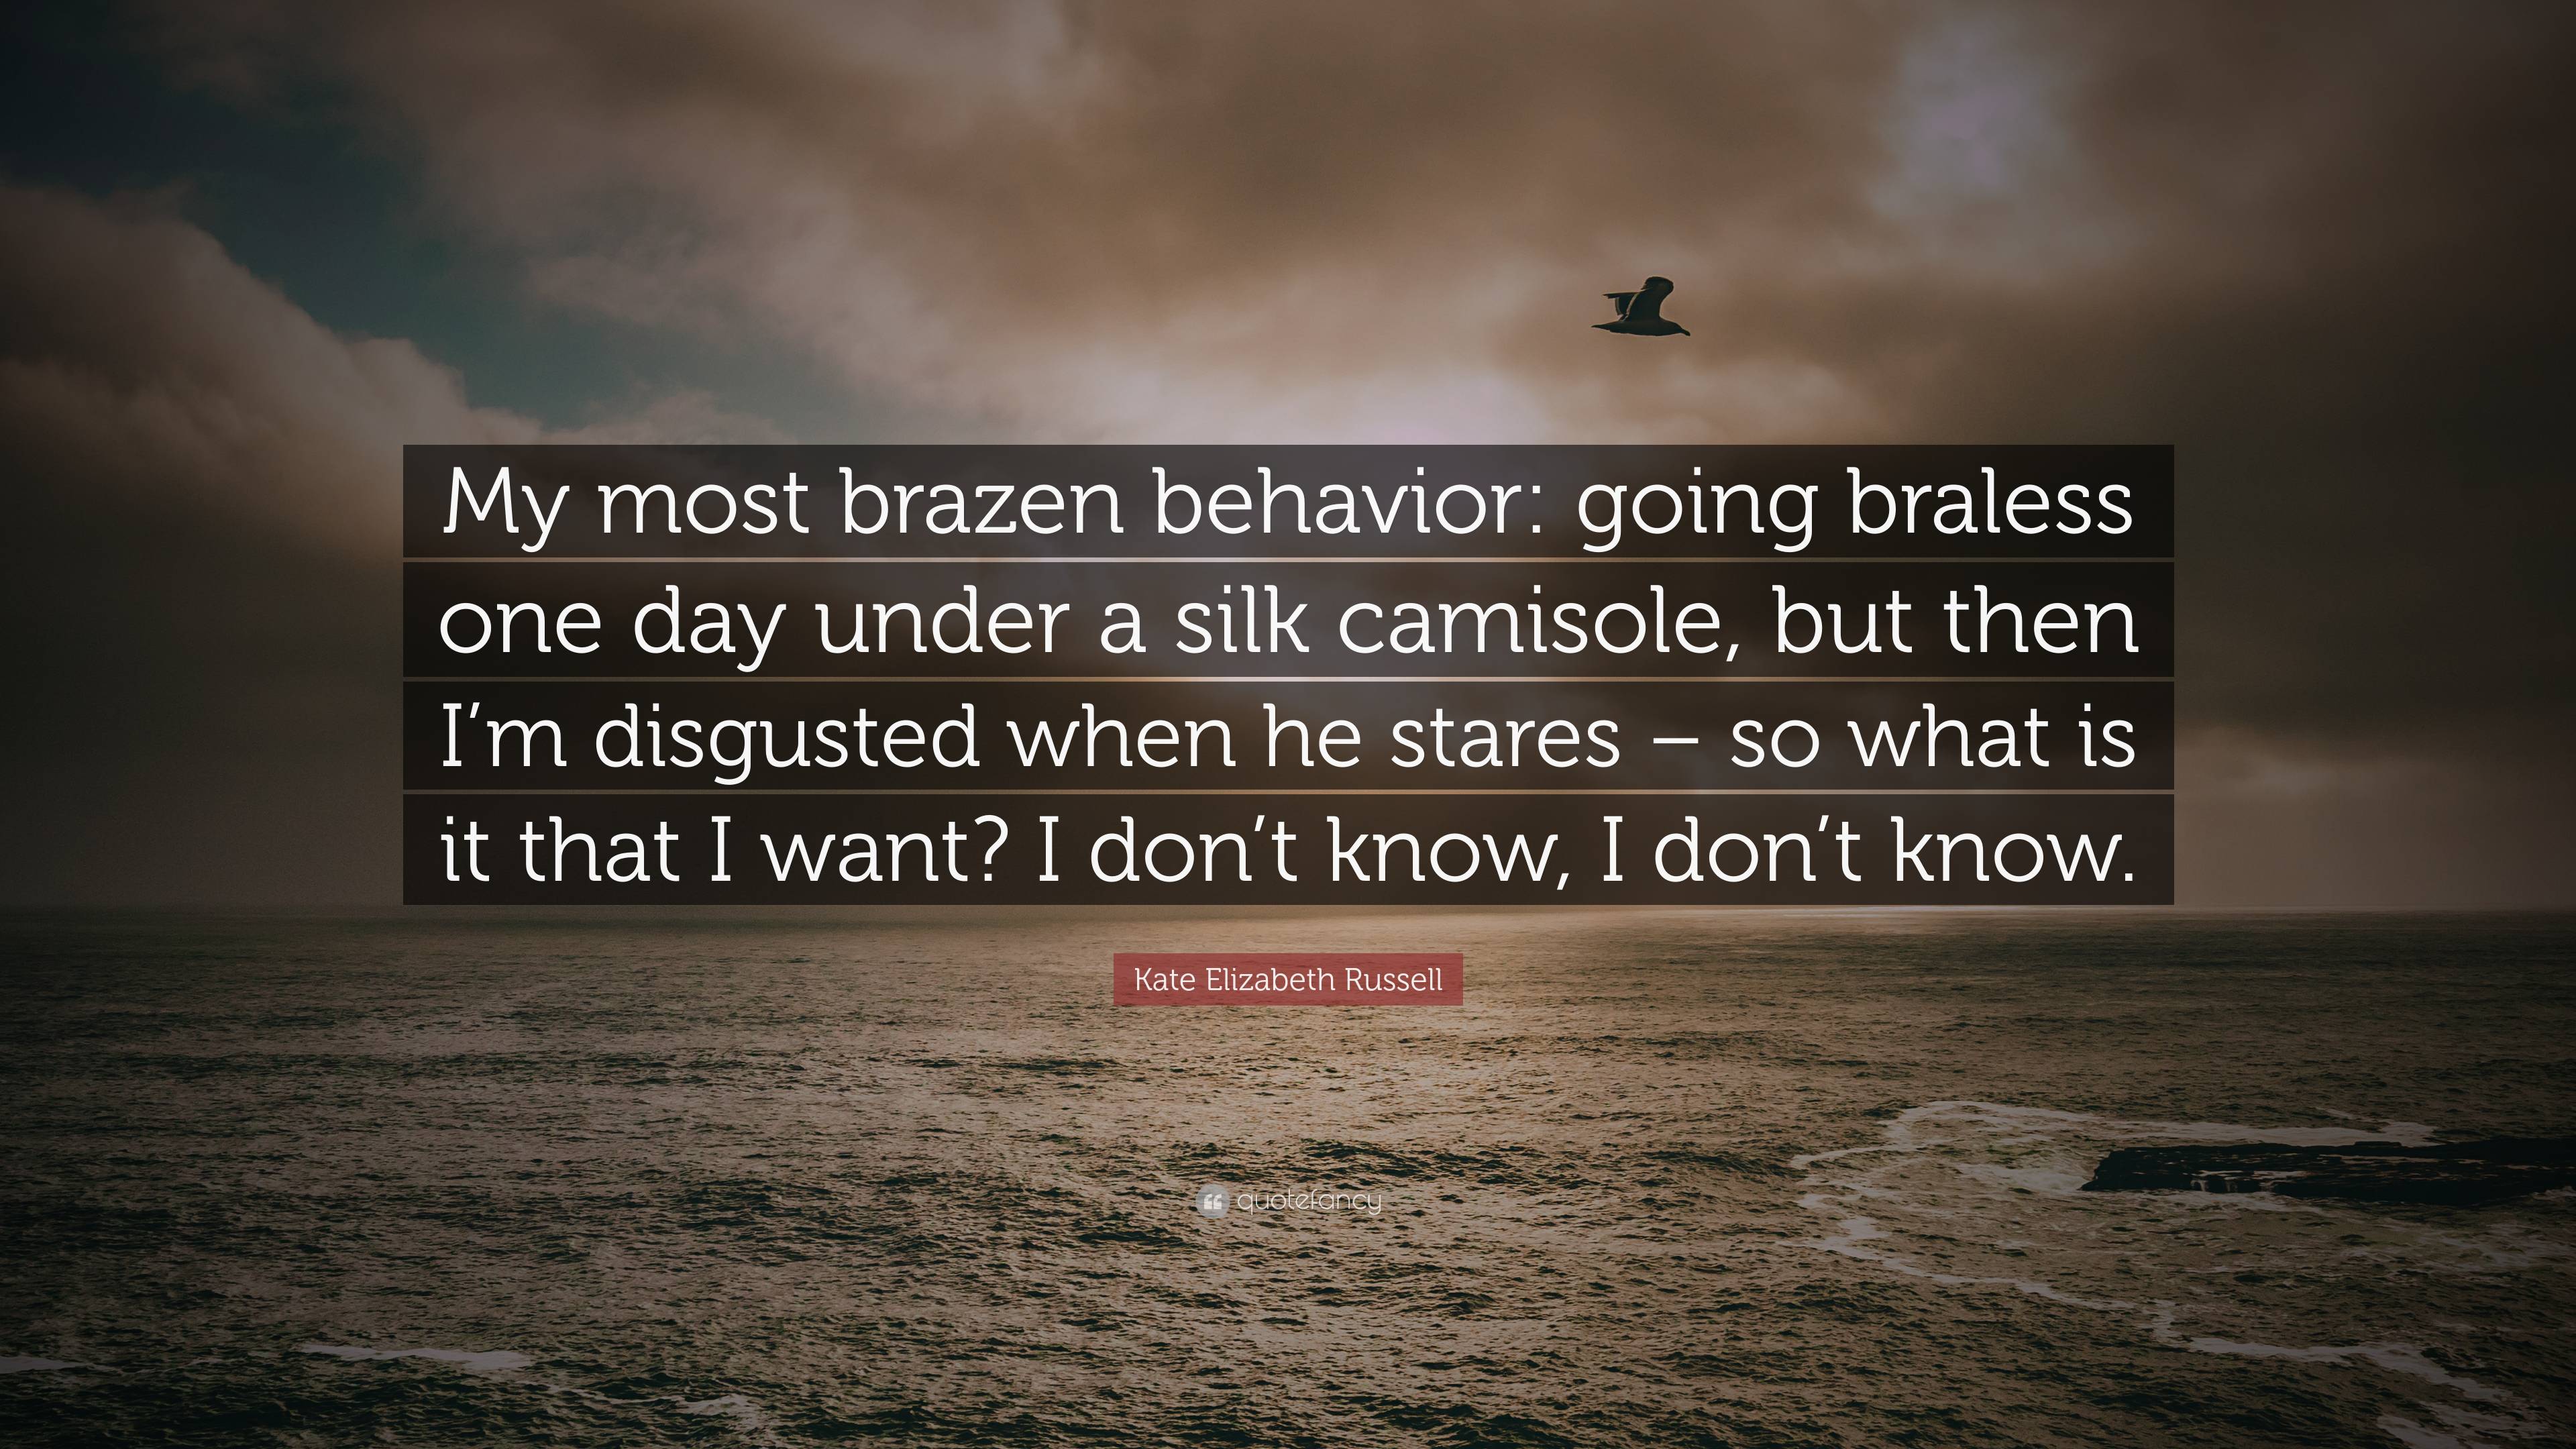 Kate Elizabeth Russell Quote “my Most Brazen Behavior Going Braless One Day Under A Silk